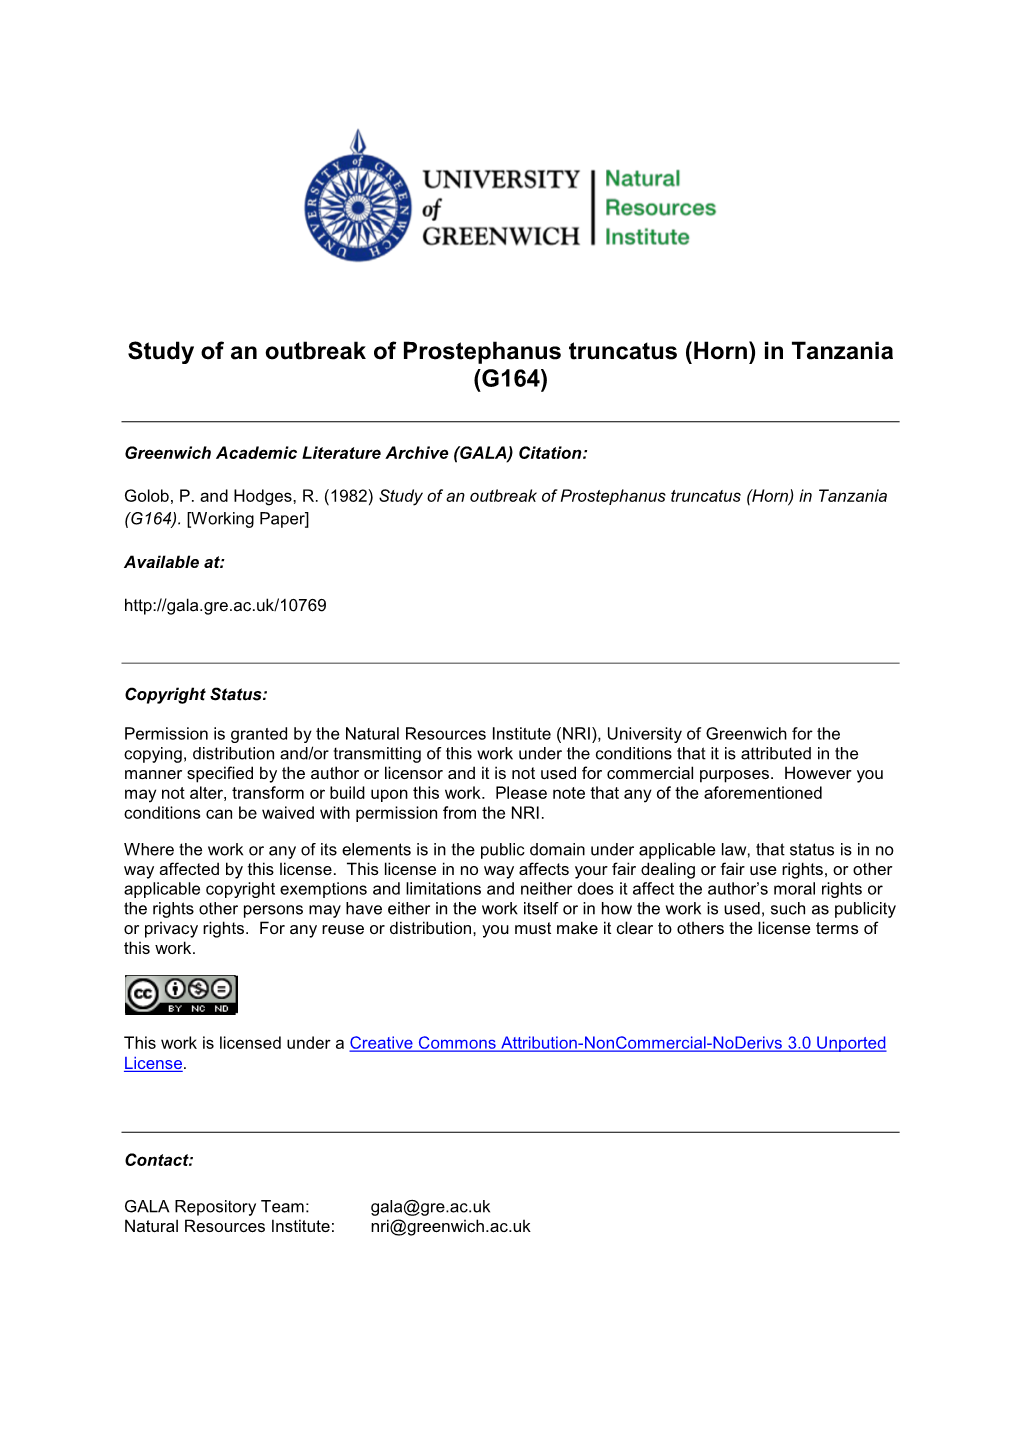 Study of an Outbreak of Prostephanus Truncatus (Horn) in Tanzania (G164)